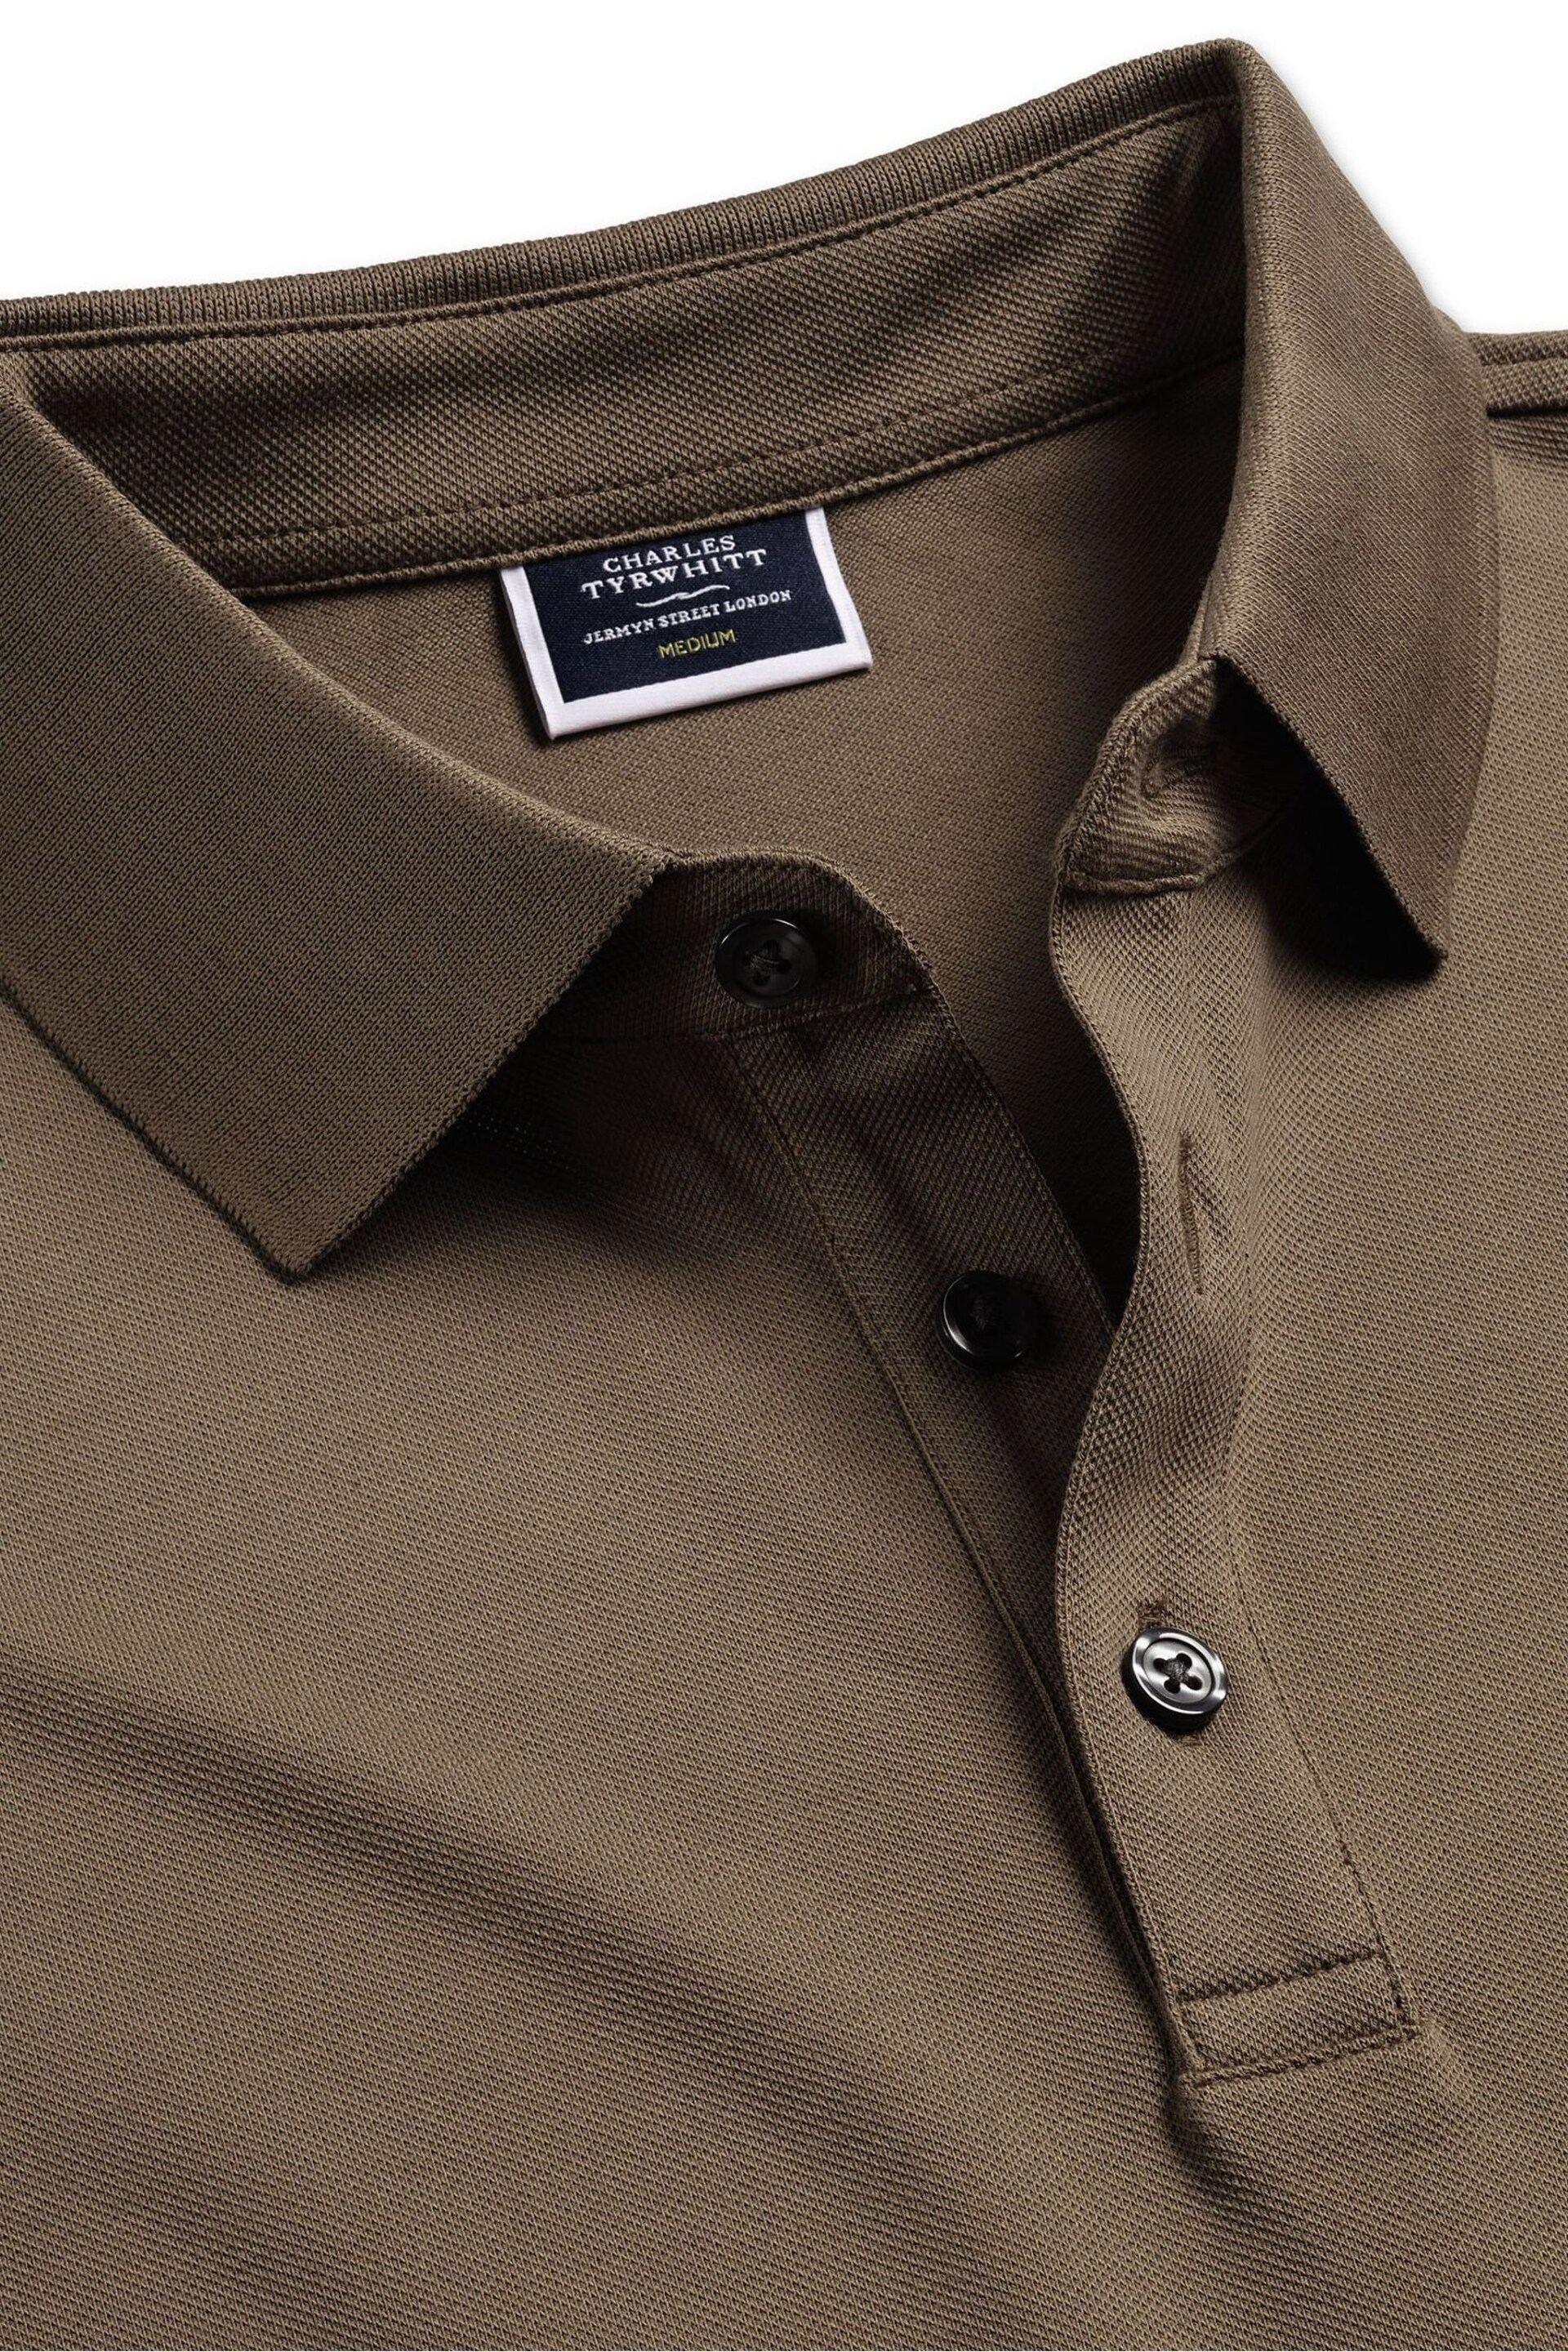 Charles Tyrwhitt Brown Solid Long Sleeve Plain Tyrwhitt Pique Polo Shirt - Image 4 of 5